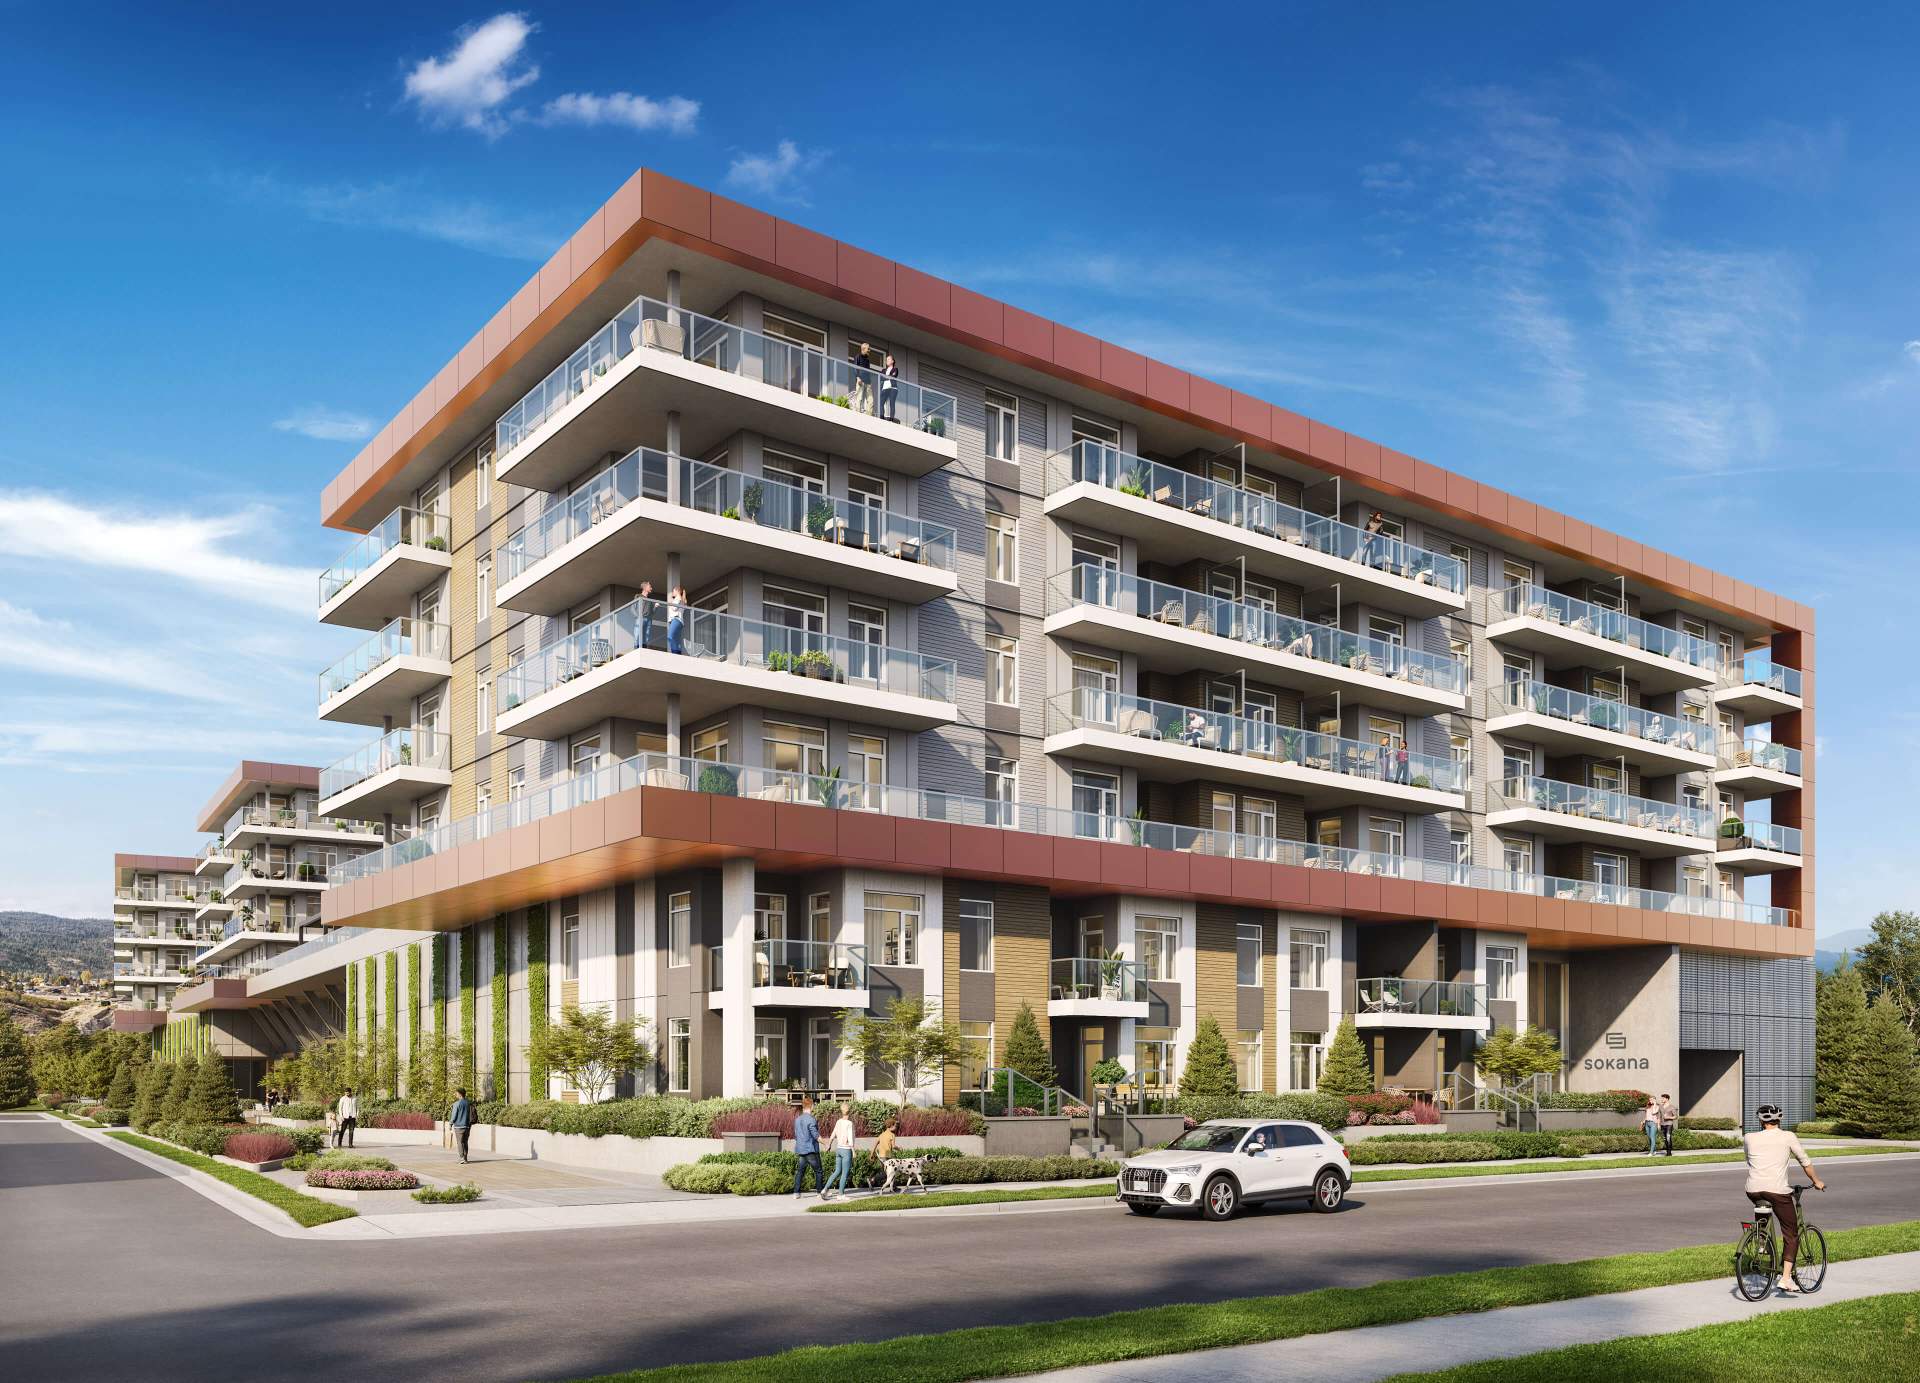 A new Penticton riverside development with 234 condominiums.